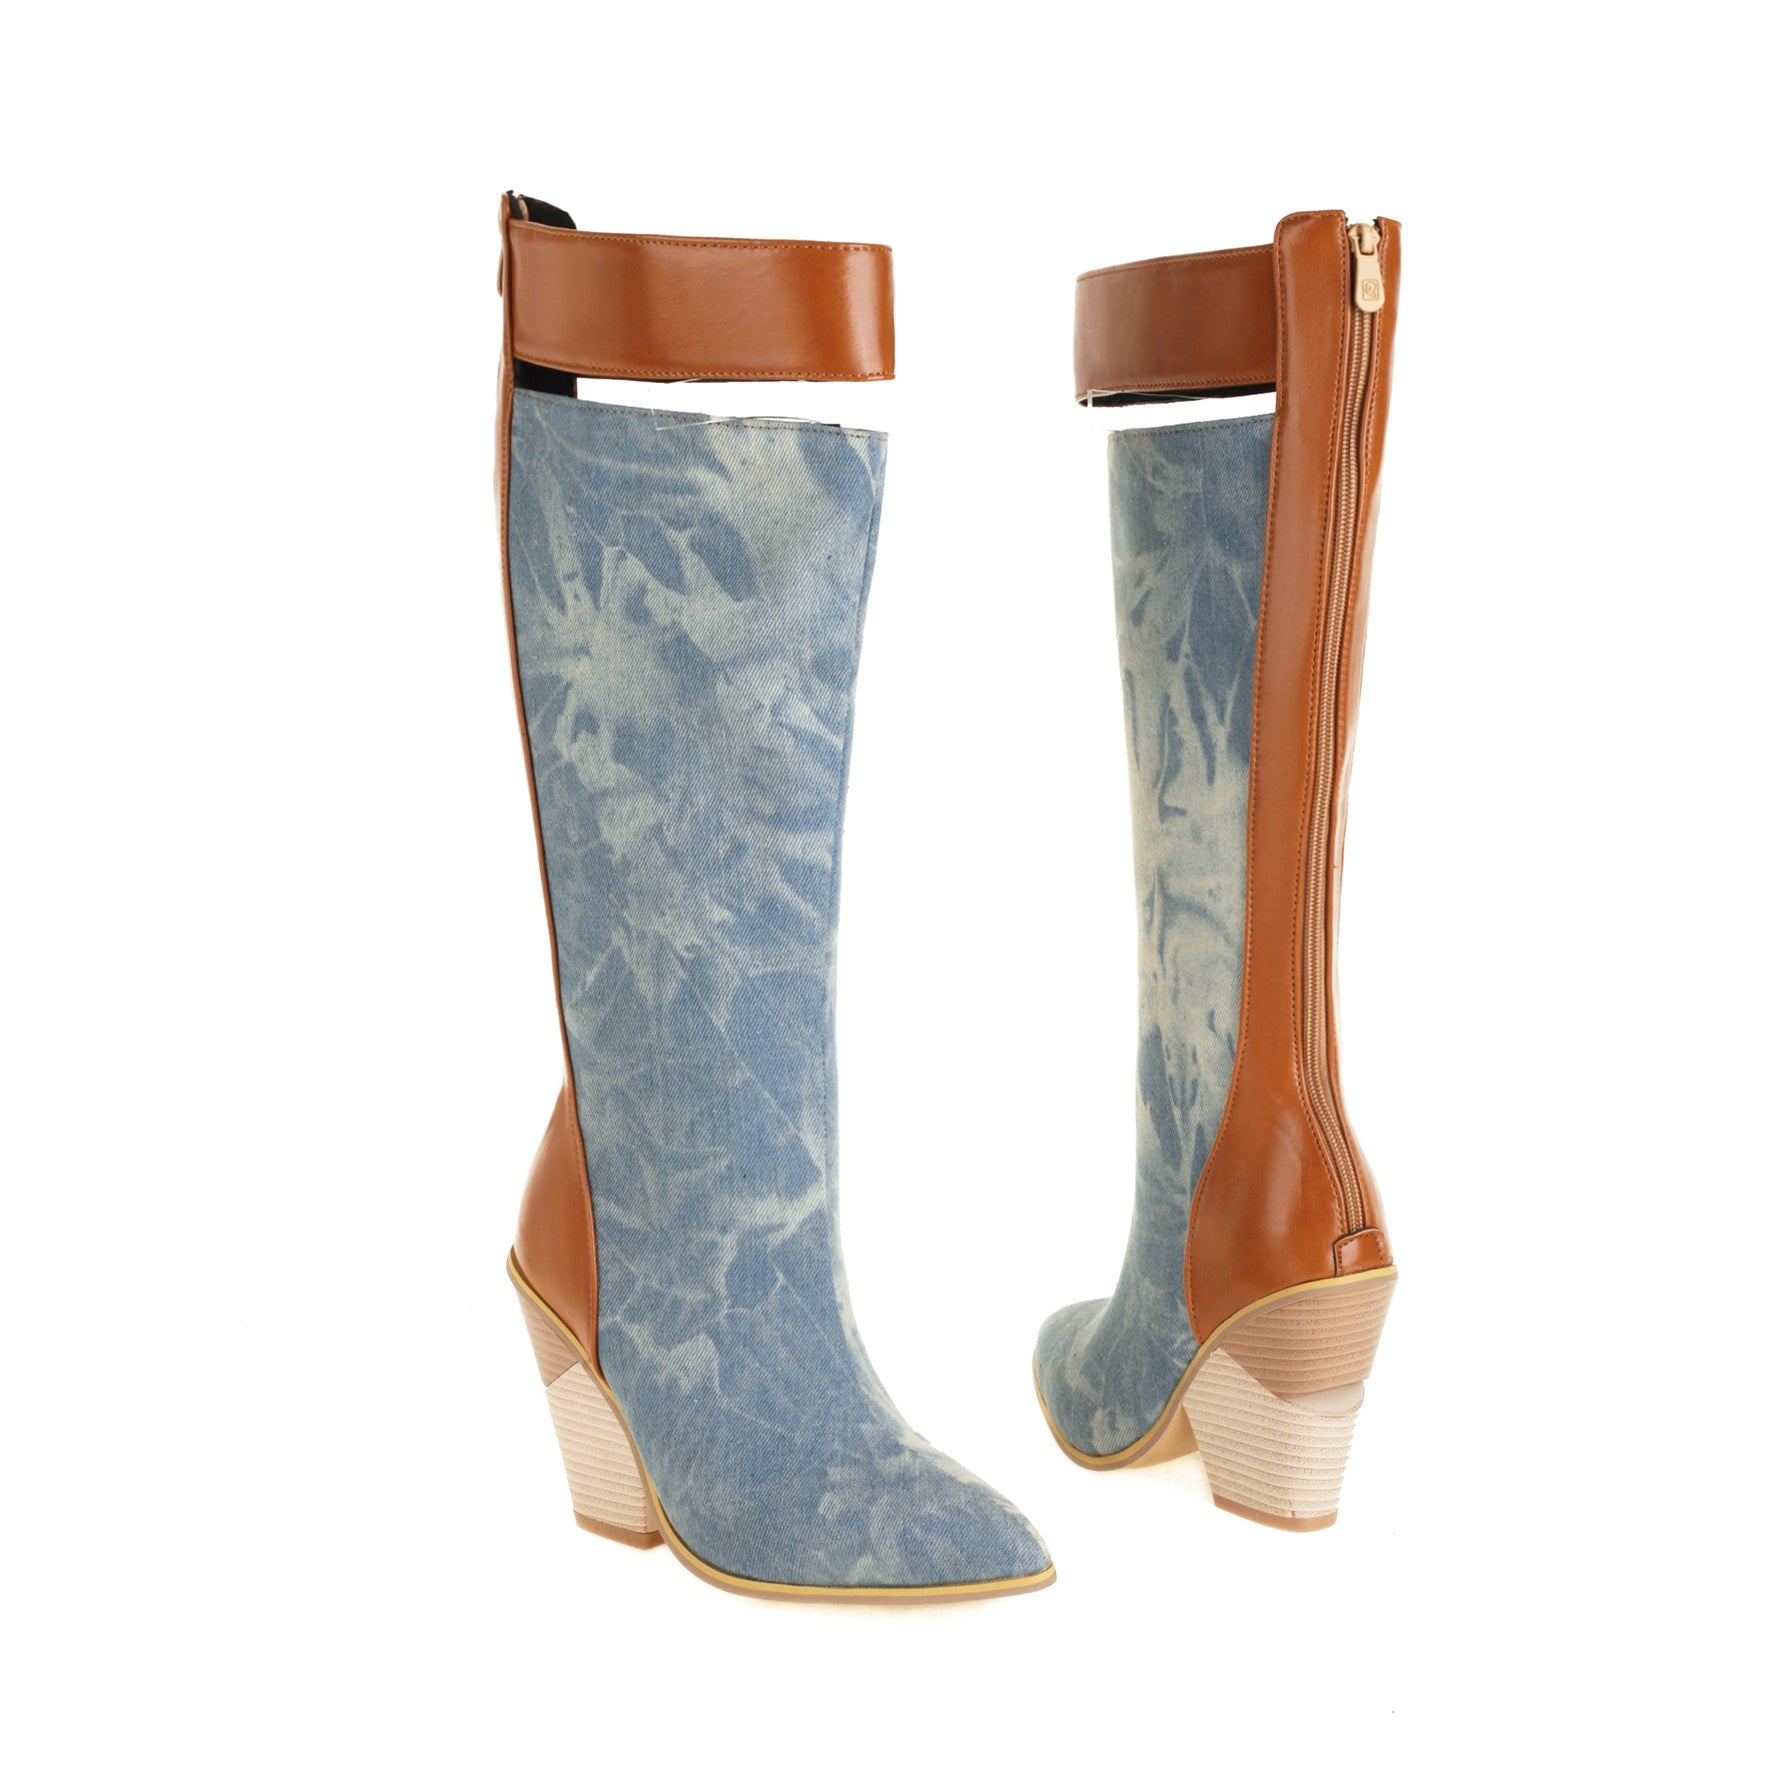 Bigsizeheels American folk wooden heel boots - Blue freeshipping - bigsizeheel®-size5-size15 -All Plus Sizes Available!